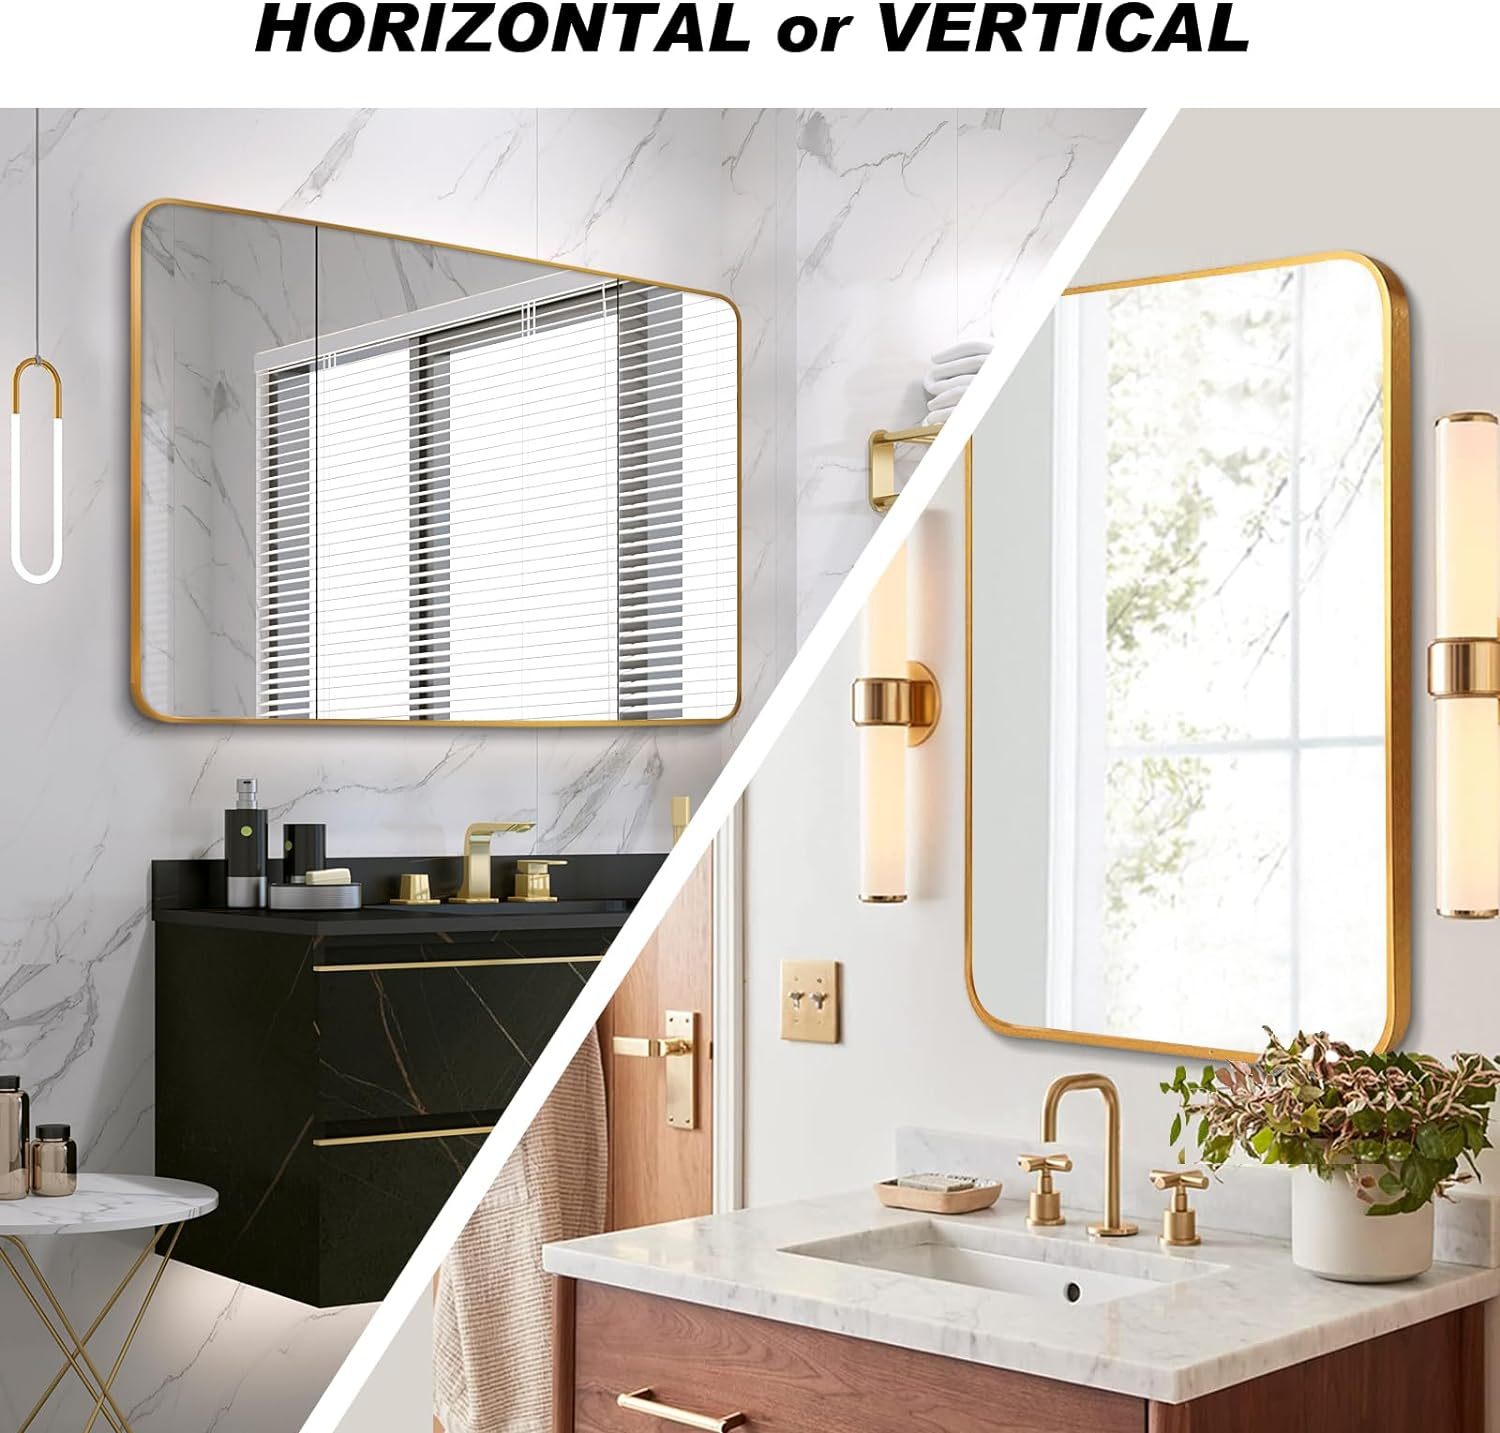 Gold 30 "x40" Rectangular Bathroom Wall Mirror gold-classic-modern-mdf+glass-aluminium